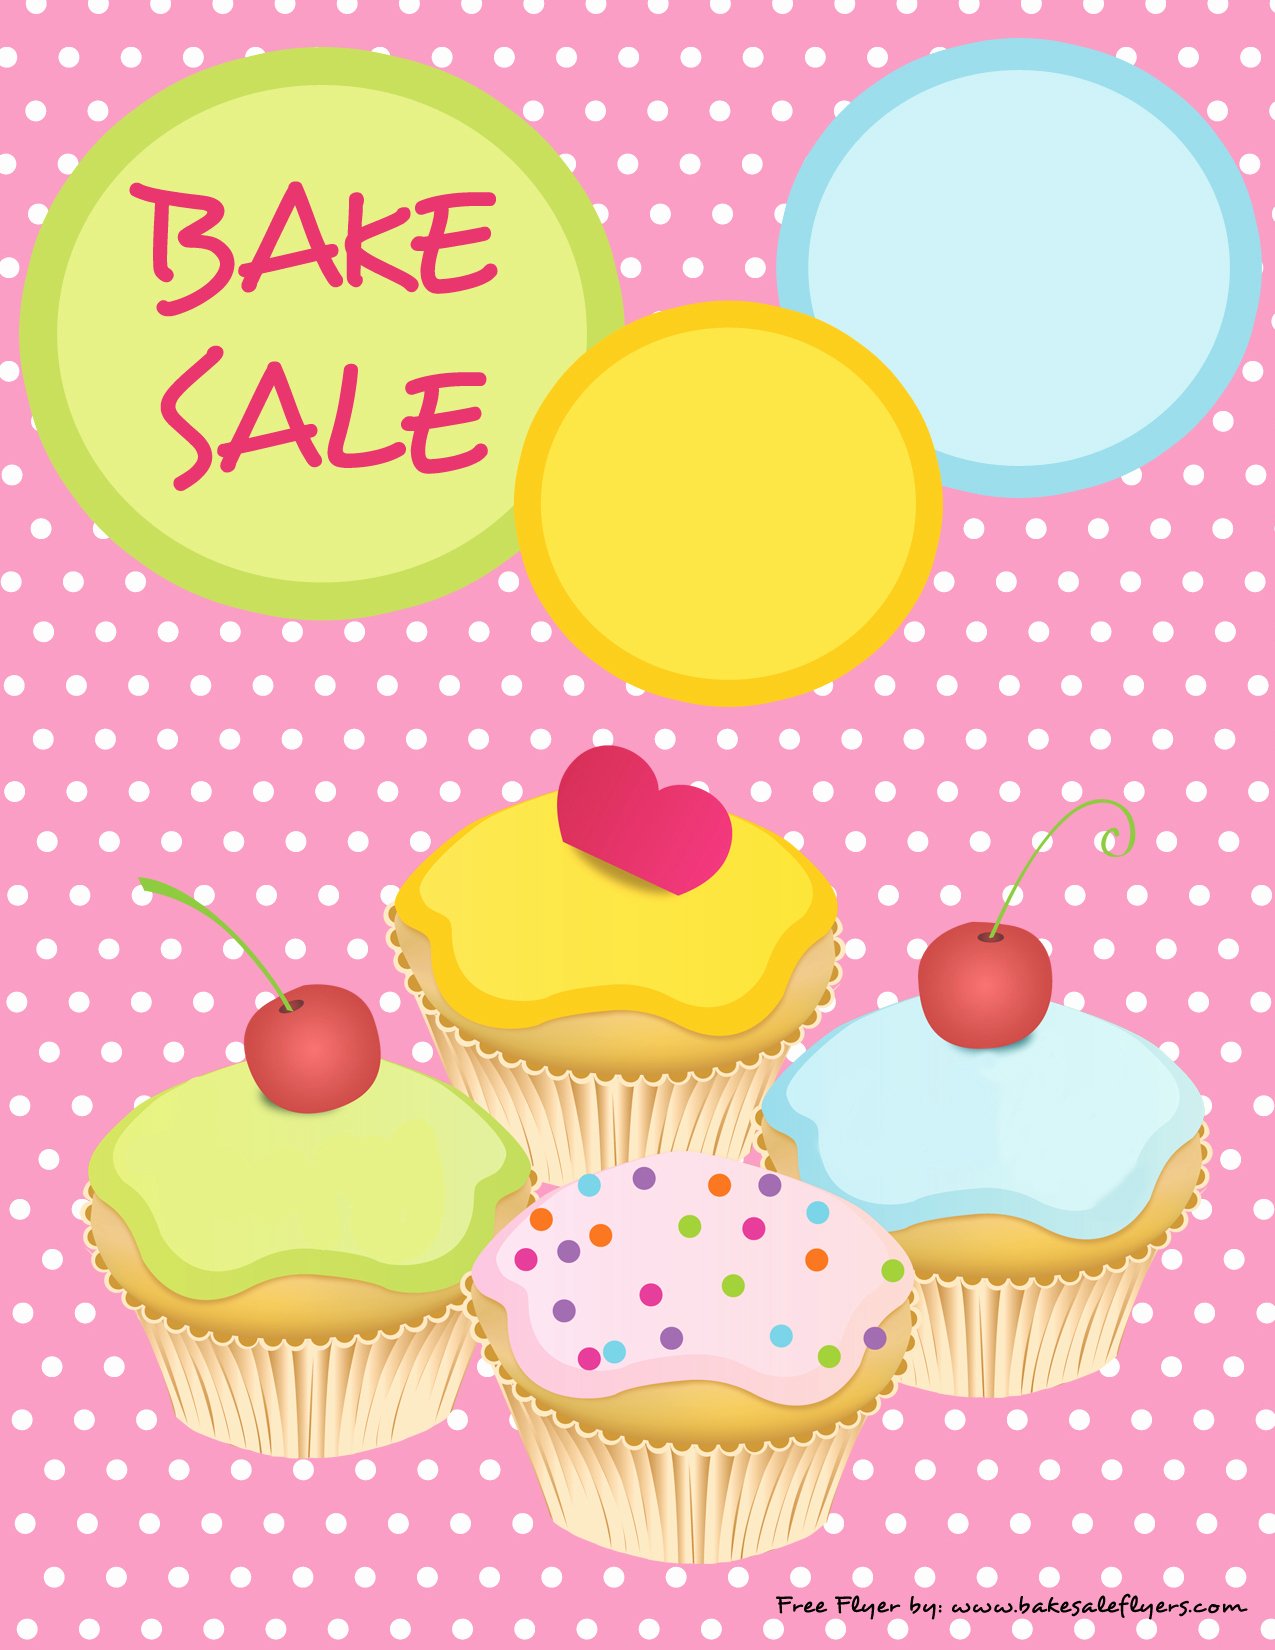 Bake Sale Flyer Template Word Beautiful Bake Sale Flyers – Free Flyer Designs